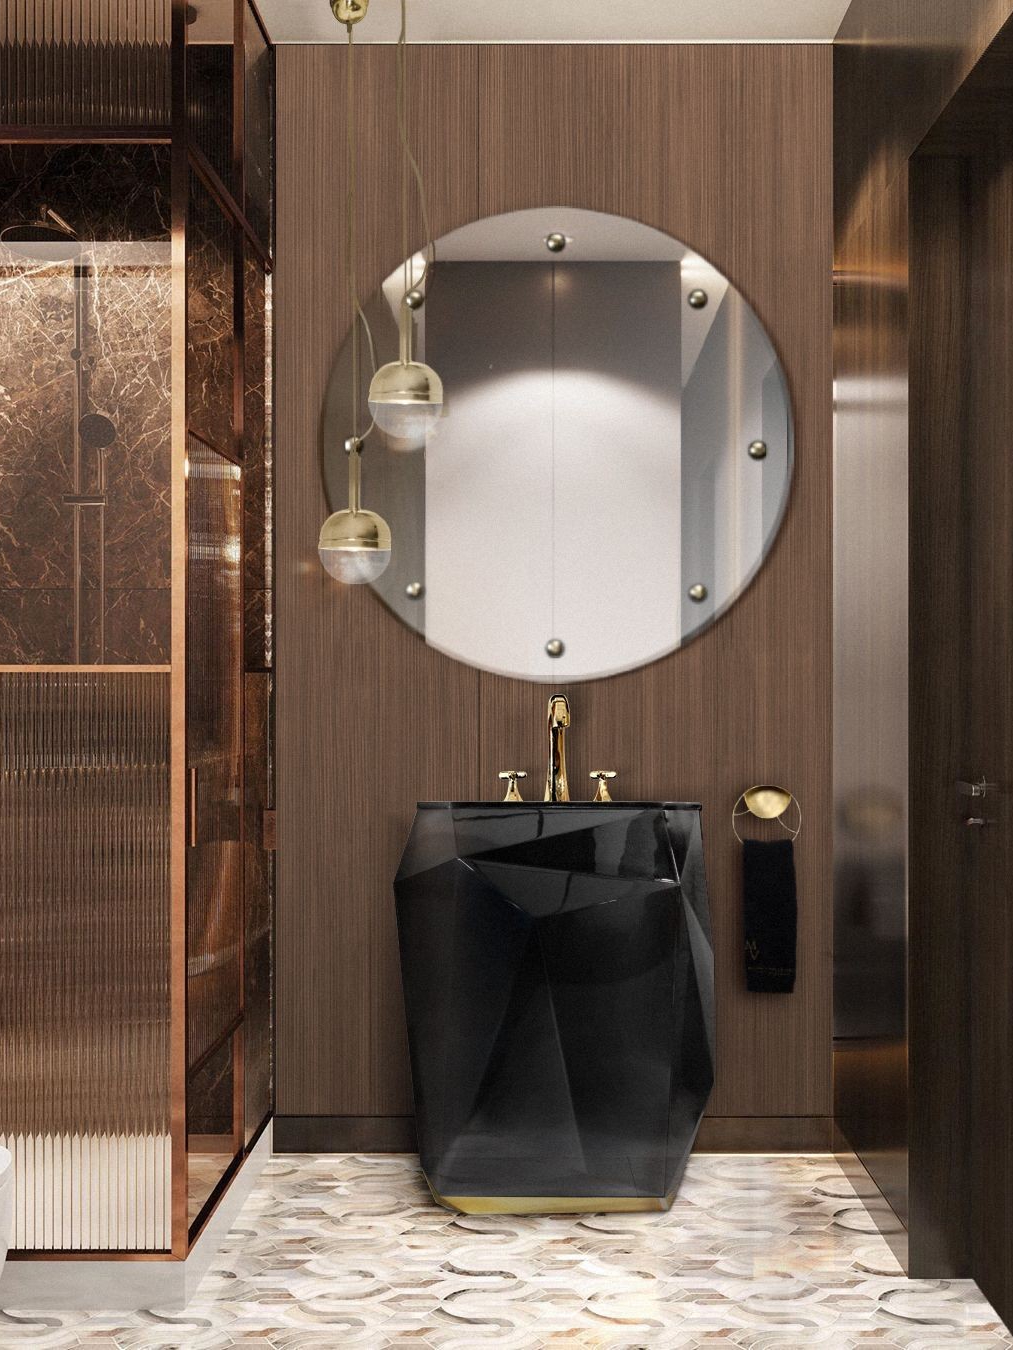 A Completely Innovative Modern Mid-Century Bathroom Design - Home'Society